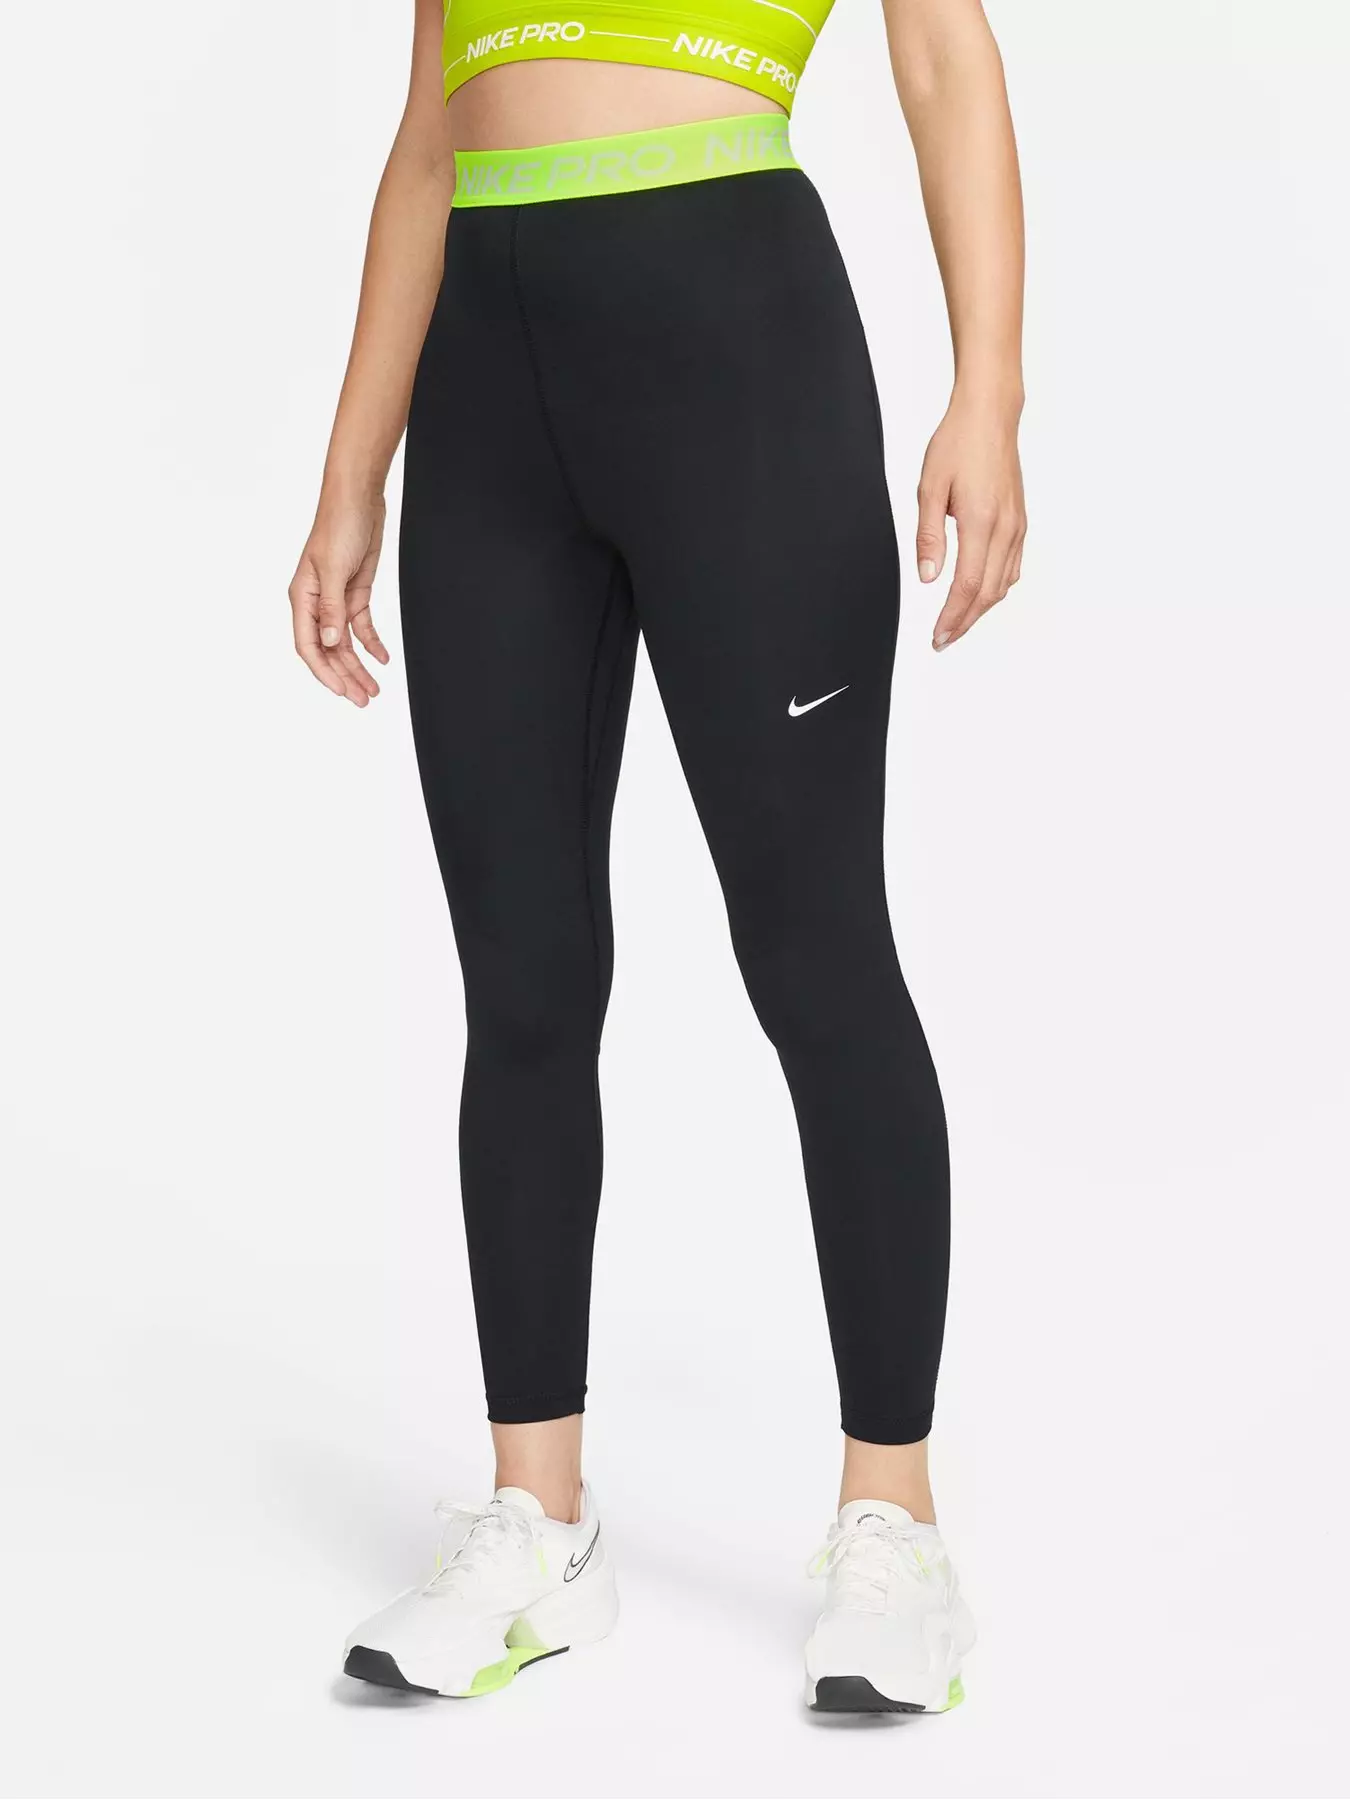 Nike Women's Dri-fit Printed Cropped Full Length Leggings Green Size XS  MSRP $65